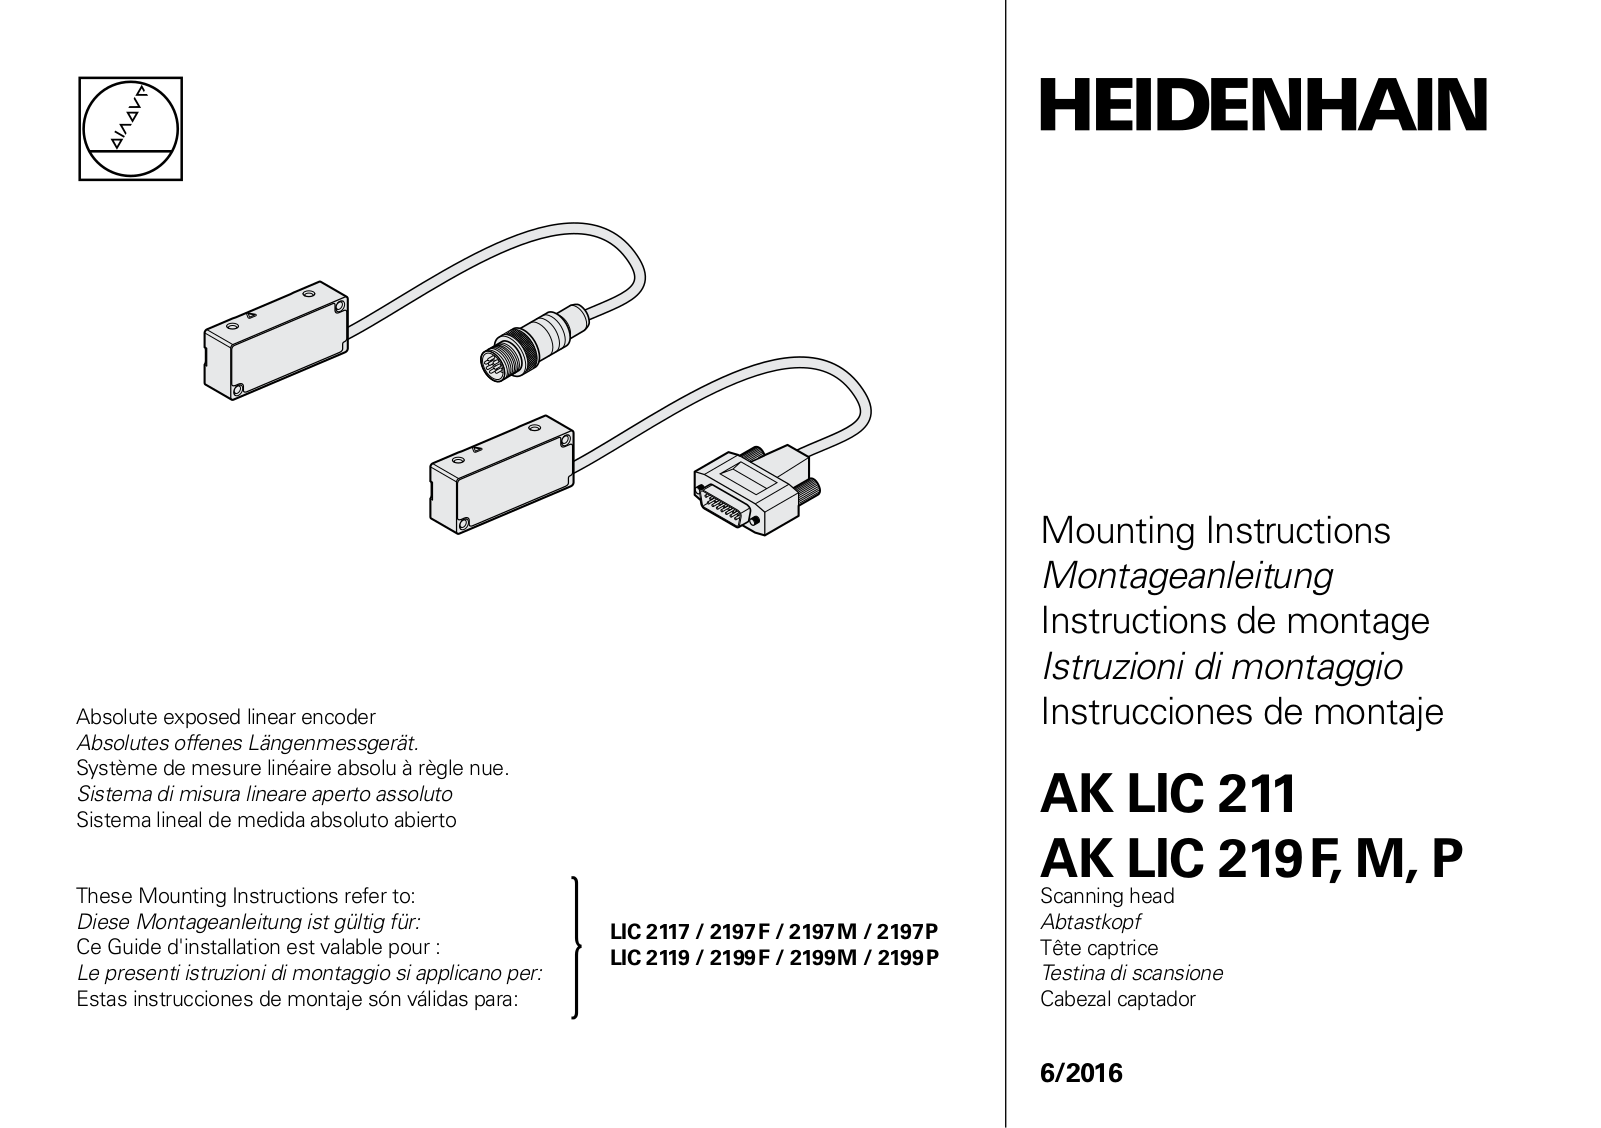 HEIDENHAIN AK LIC 211, AK LIC 219F, AK LIC 219M, AK LIC 219P, 2197F Mounting Instructions